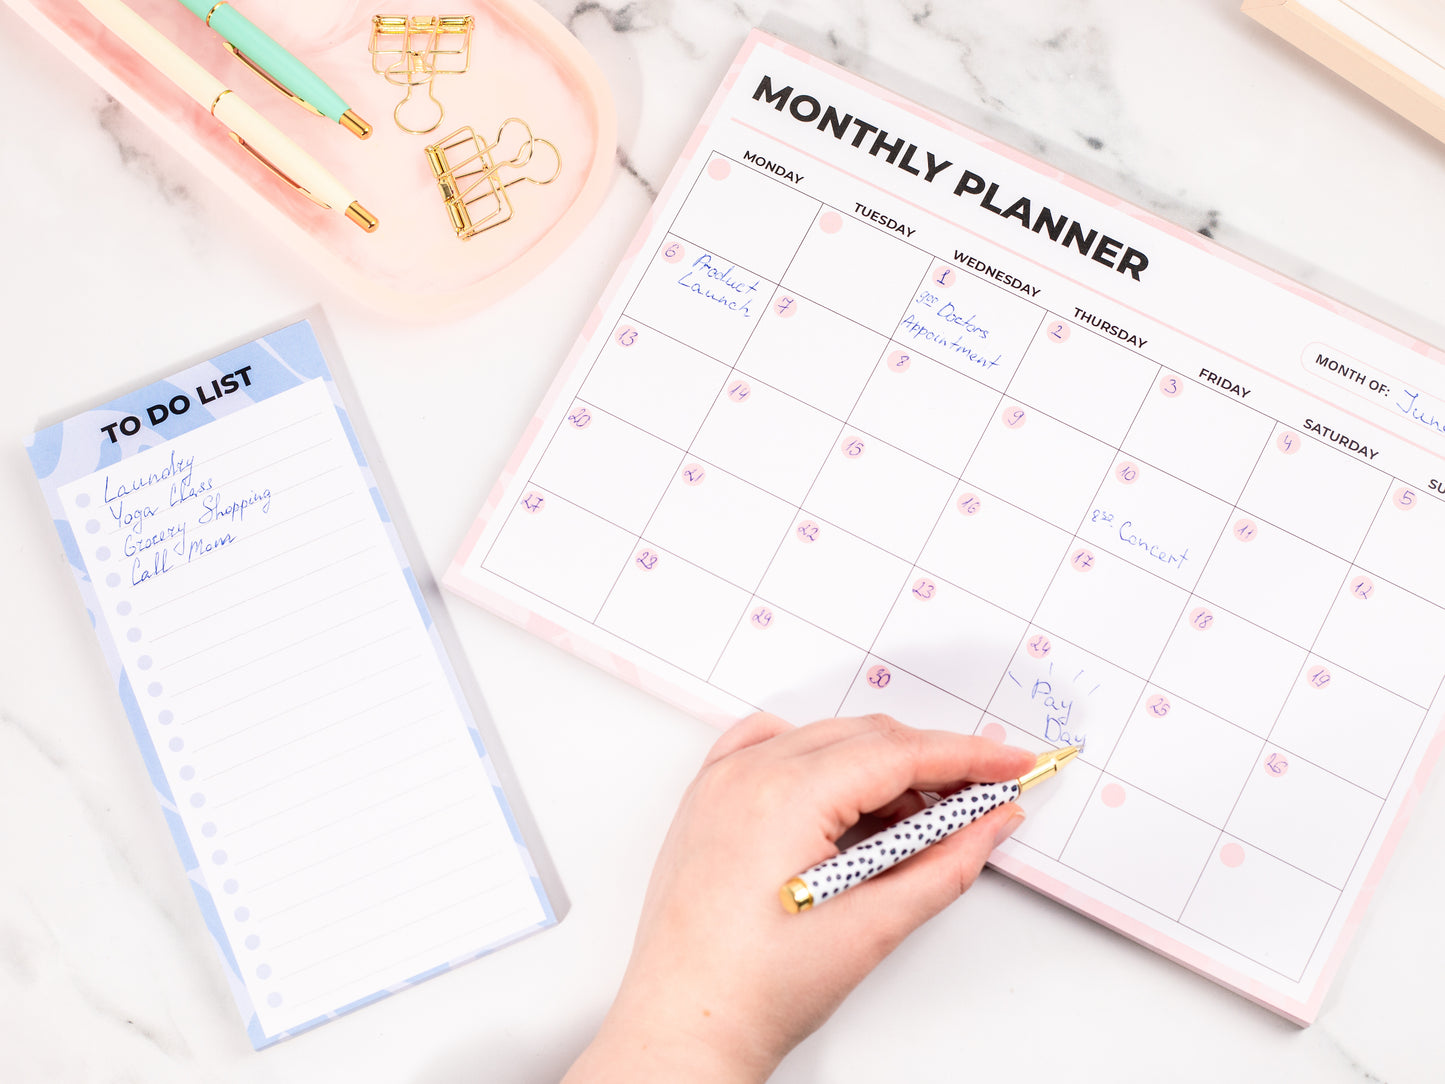 Monthly Desk Planner